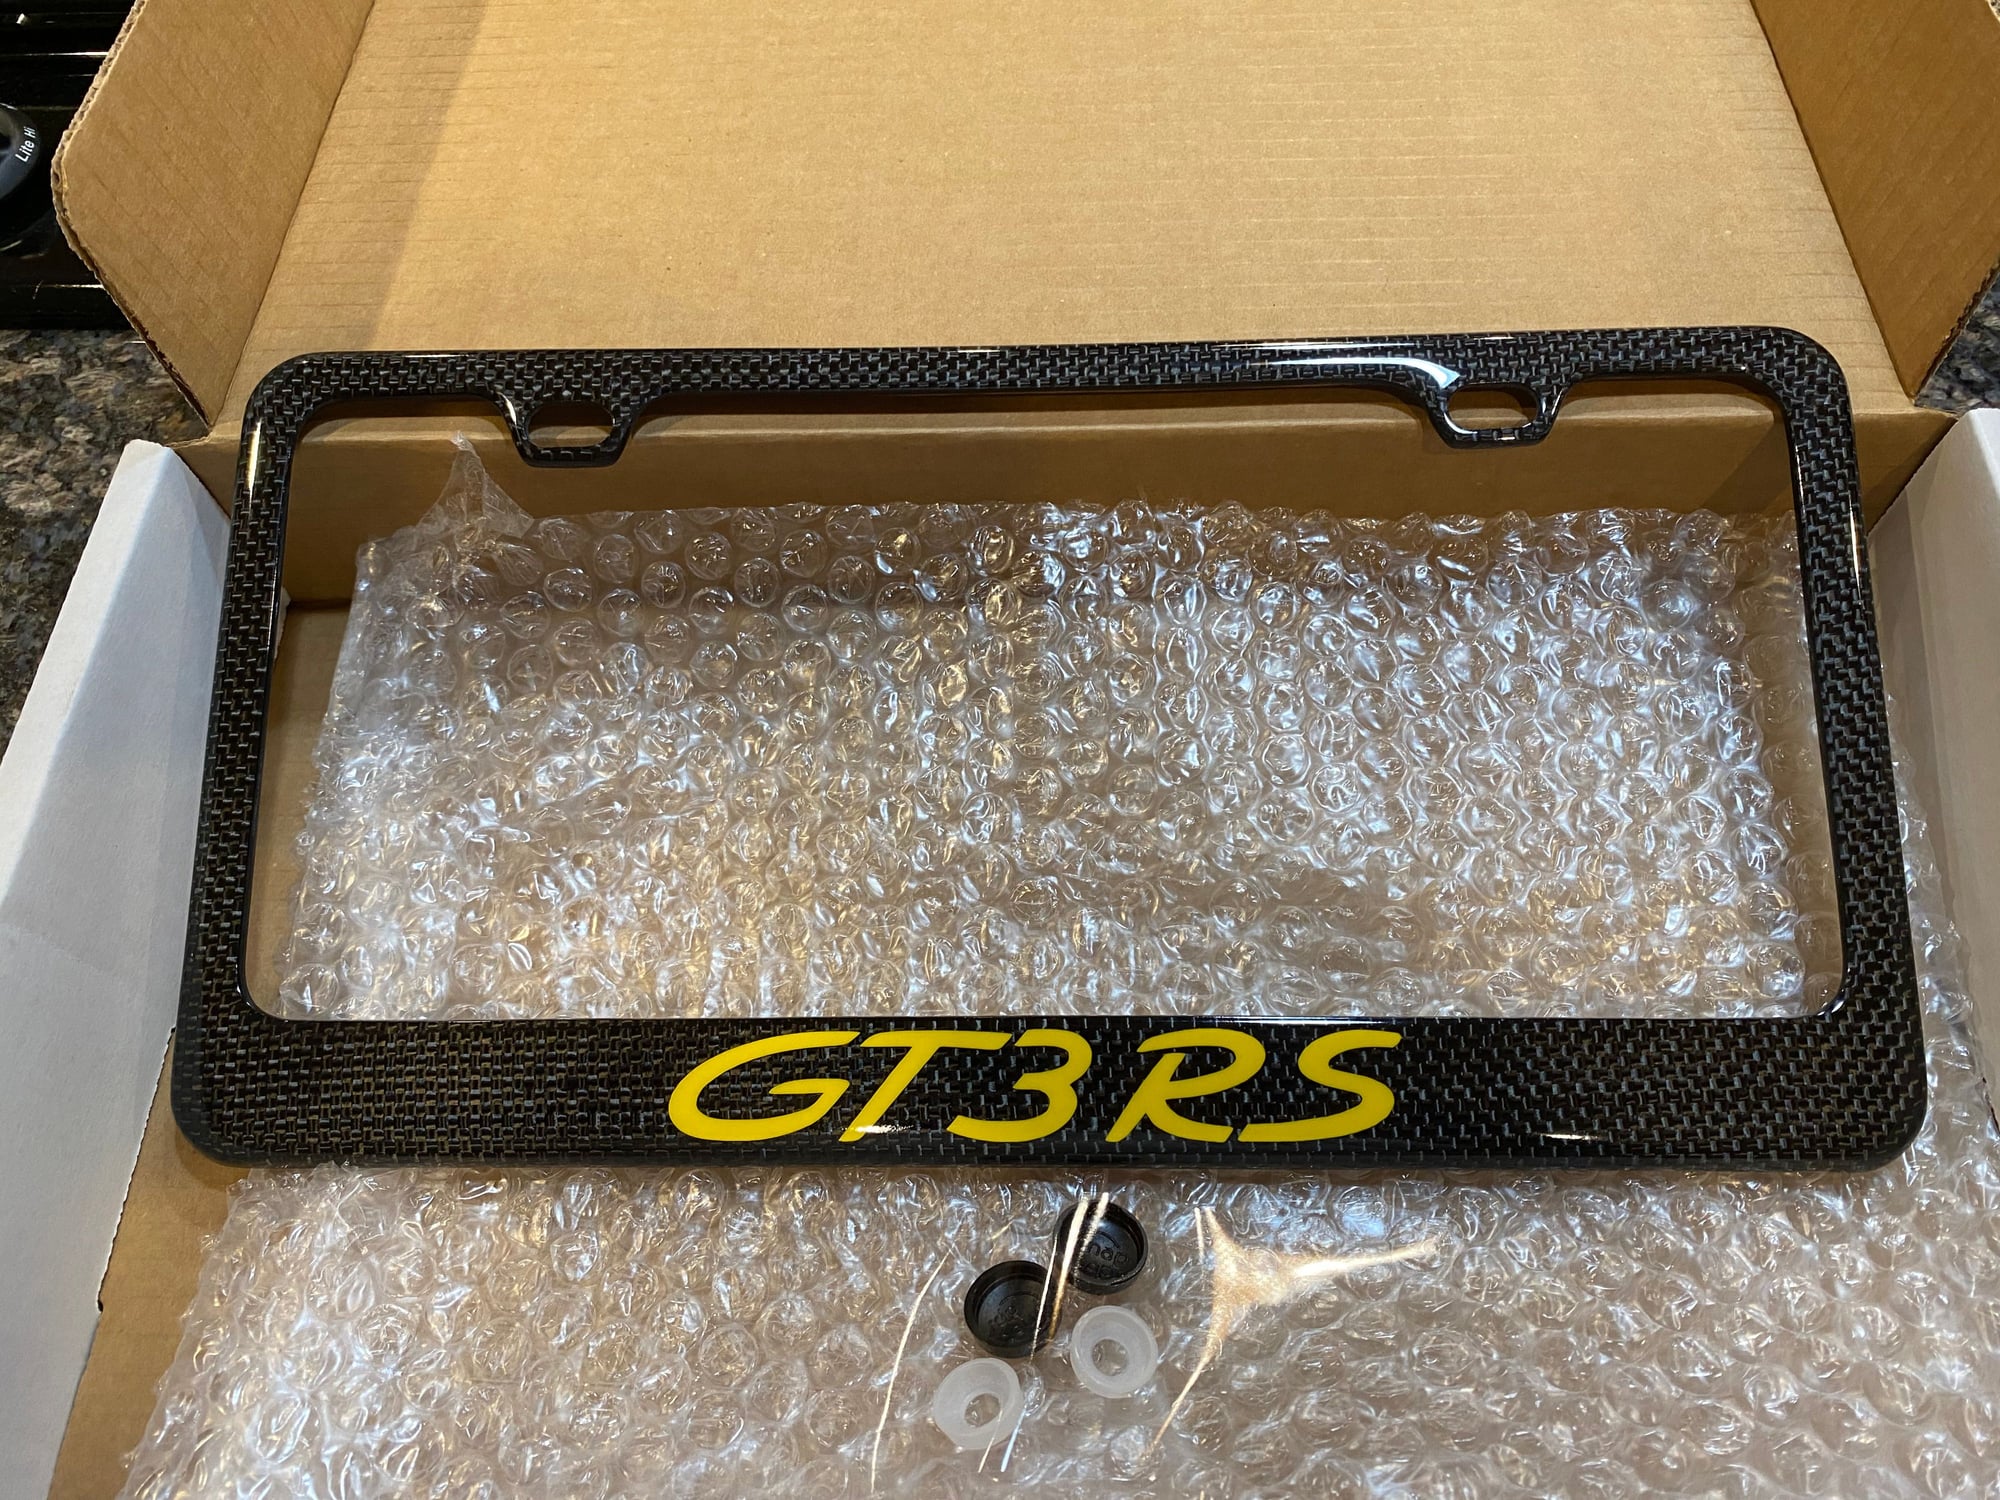 Accessories - Carbon Fiber license plate frame - New - 2018 to 2019 Porsche 911 - Lakeside, AZ 85929, United States